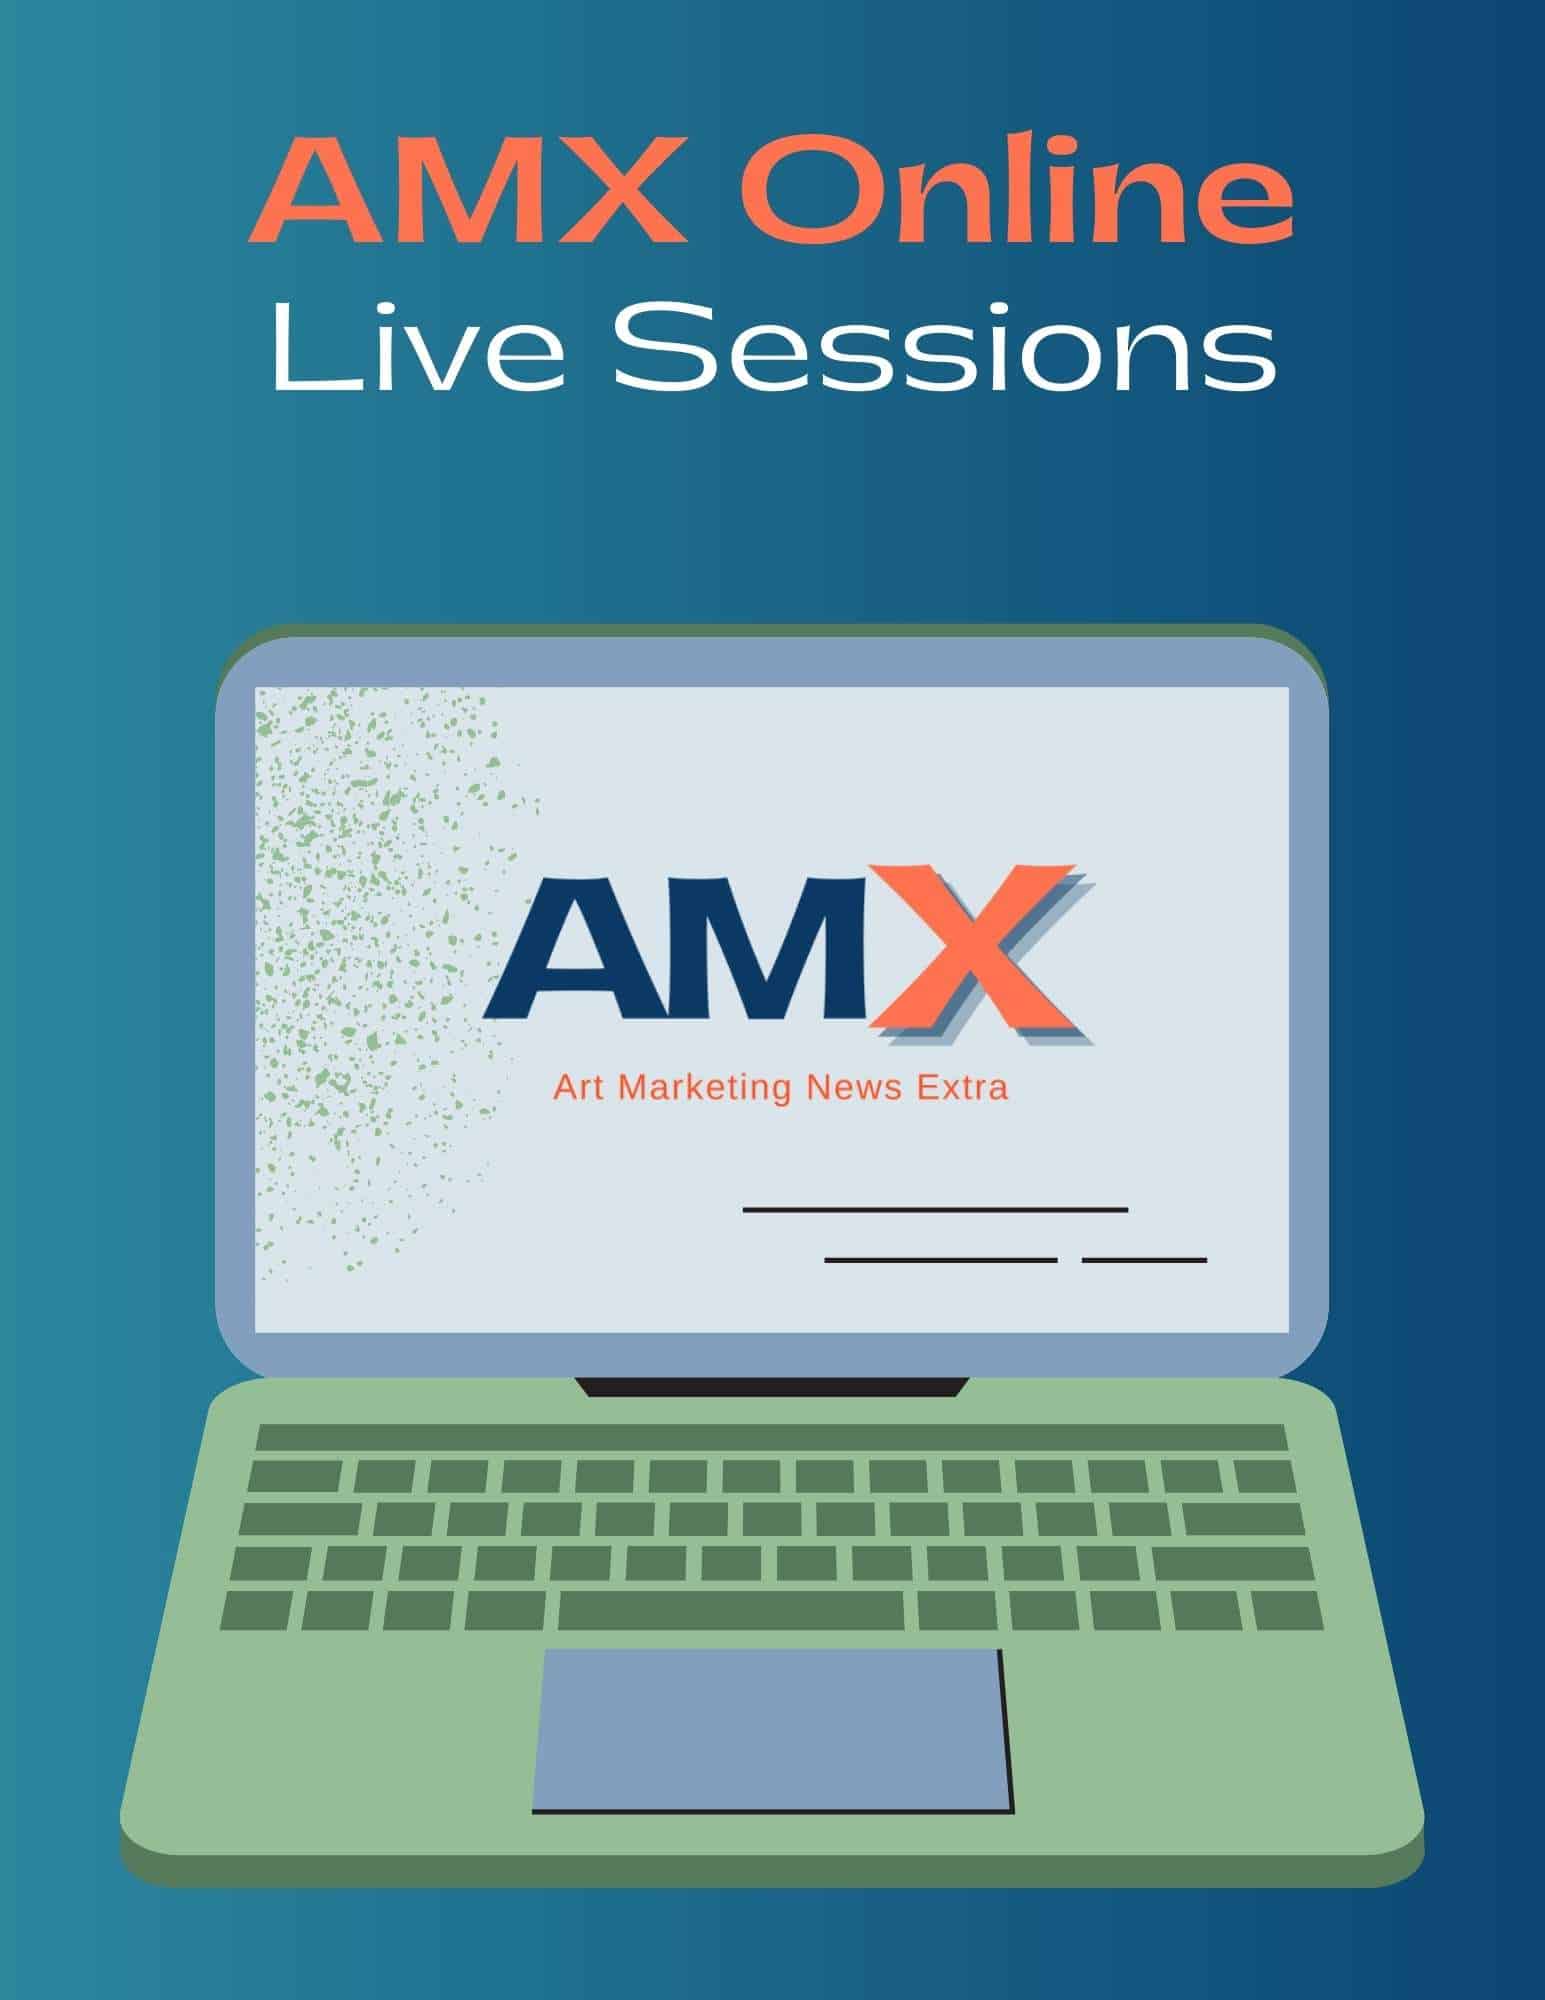 AMX Online Live Sessions